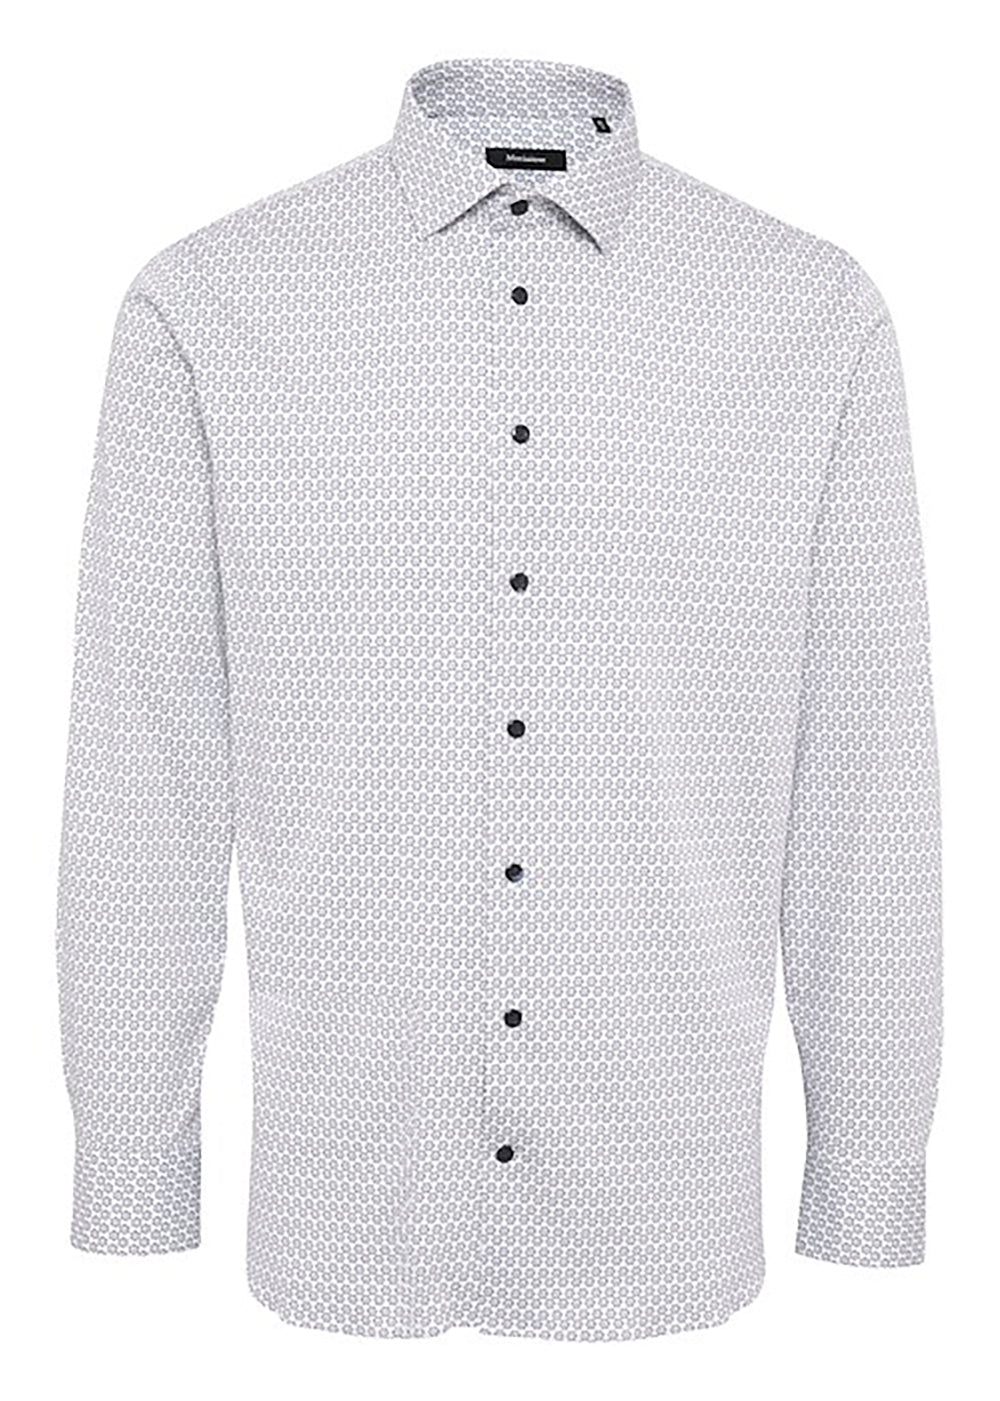 Marc Long Sleeve Shirt - White - Matinique Canada - Danali